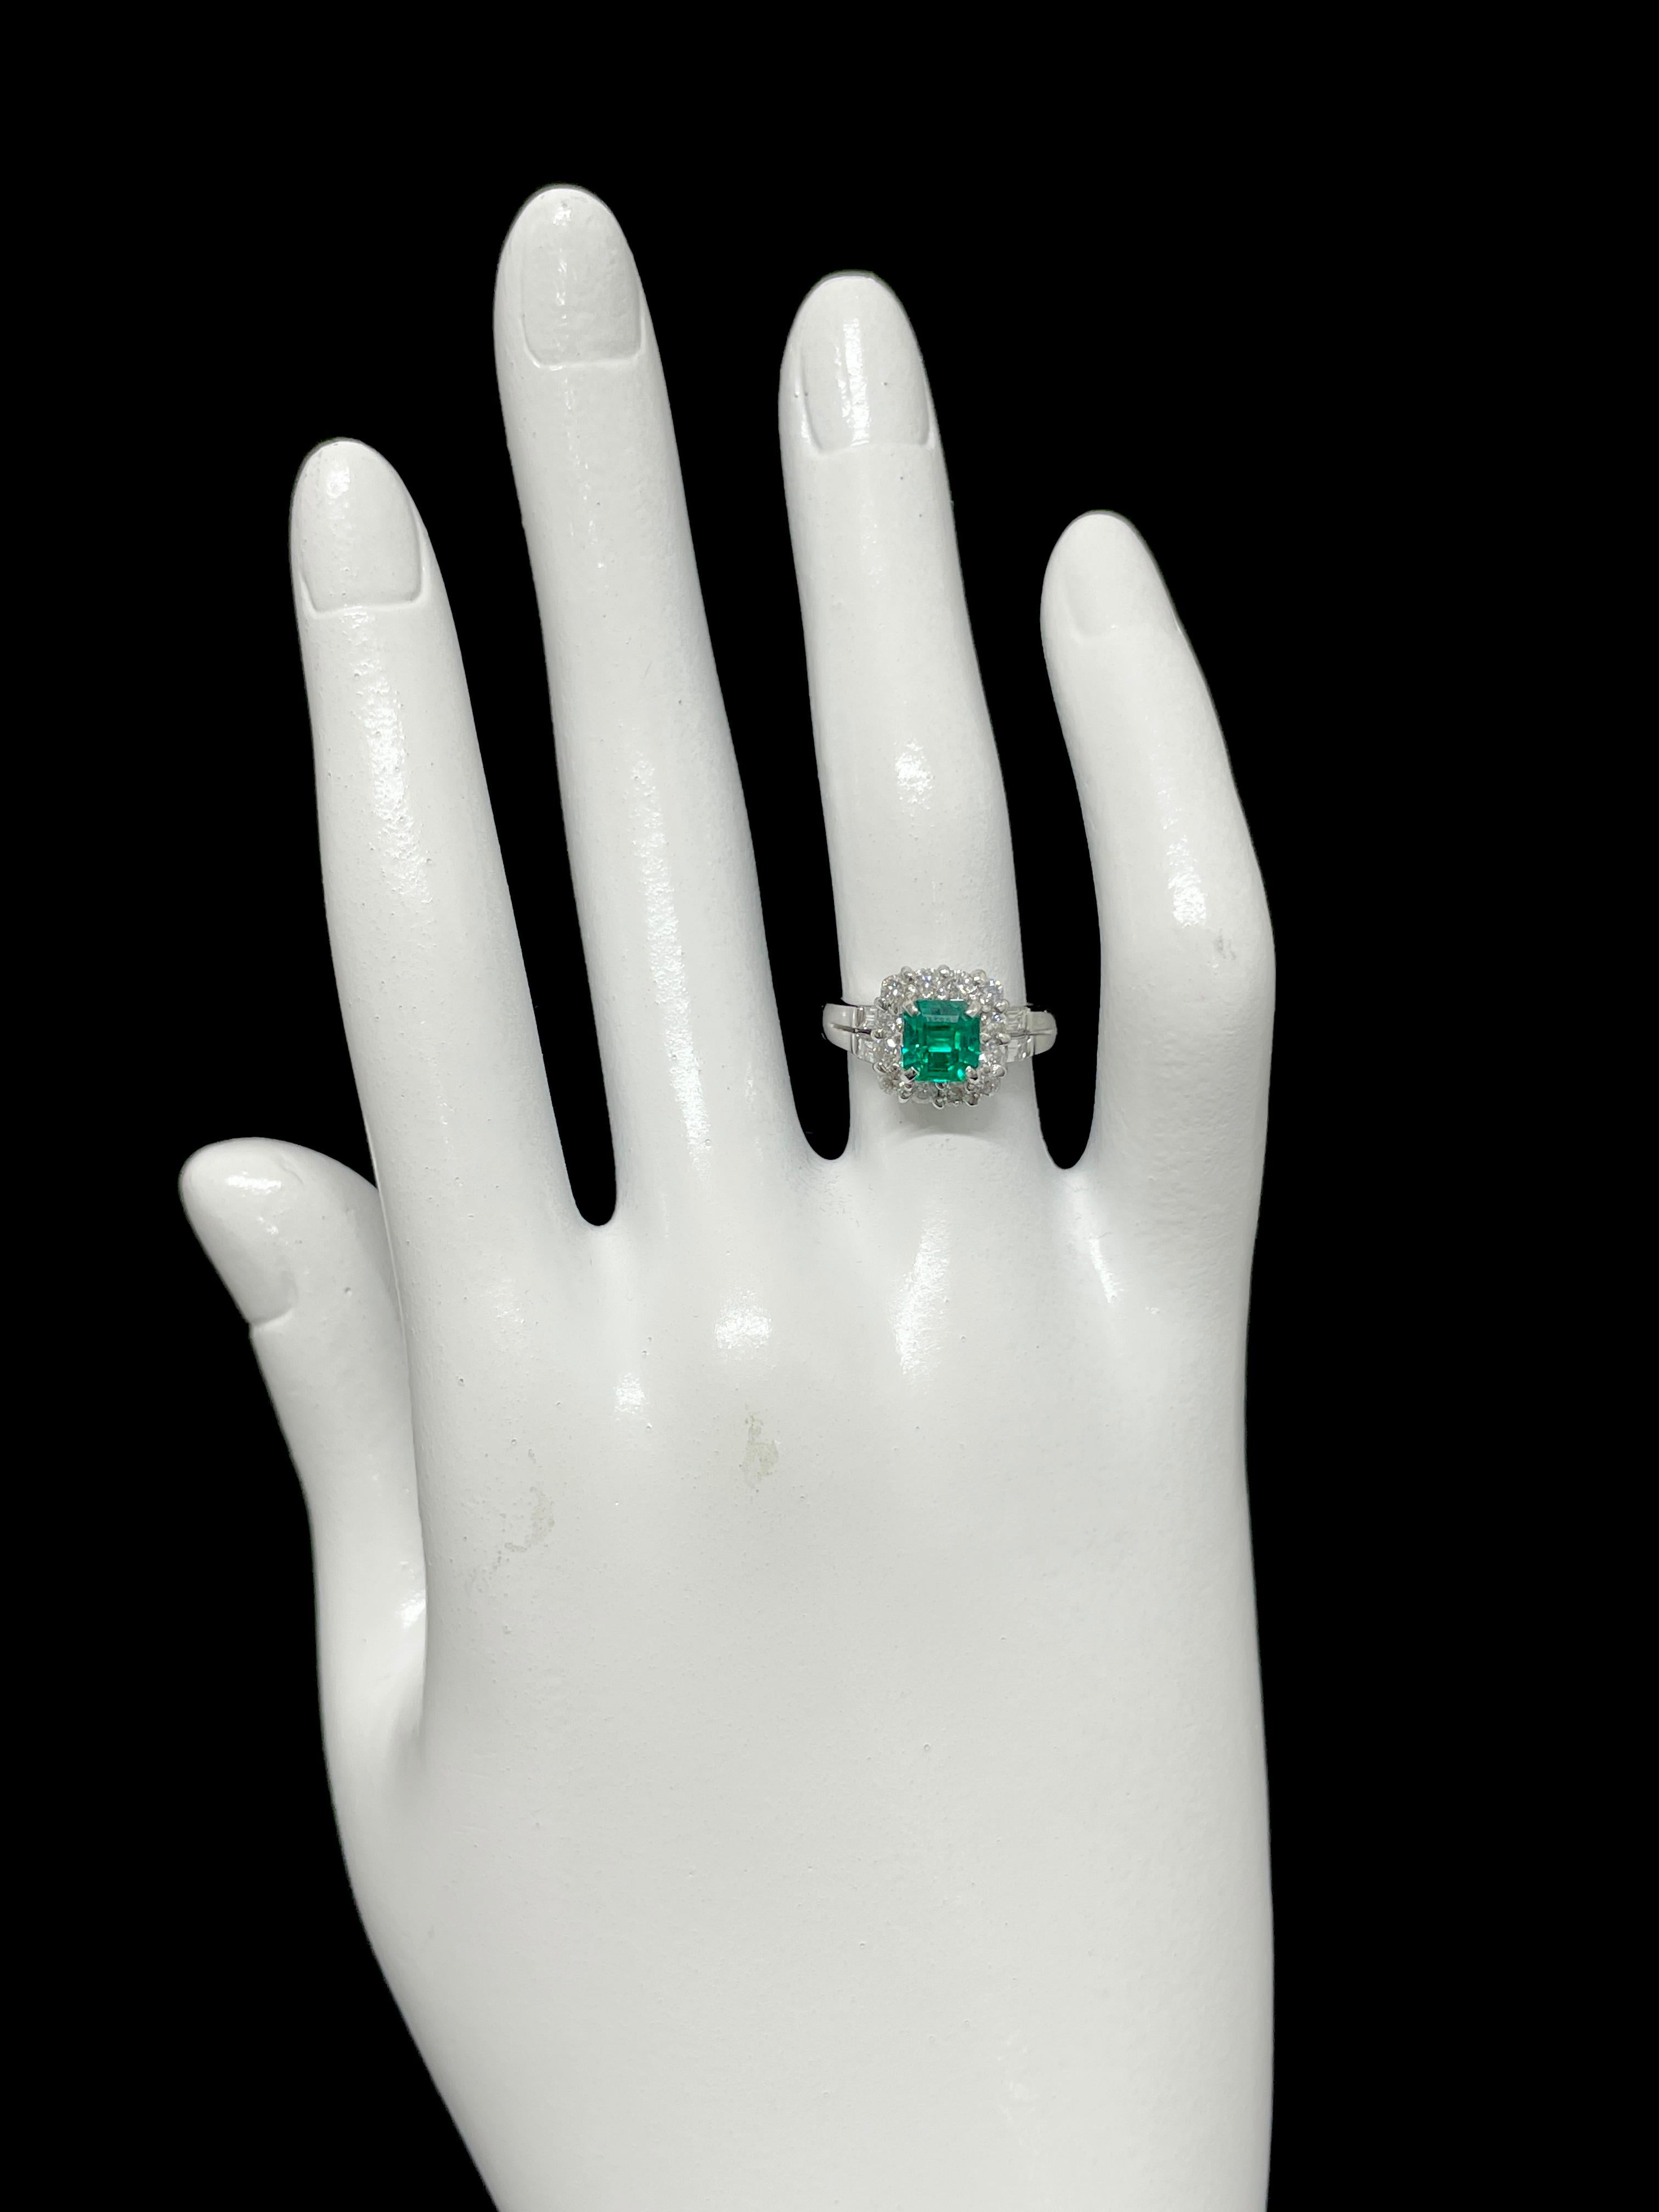 0.92 Carat Natural Vivid Green Emerald and Diamond Ring Set in Platinum 1